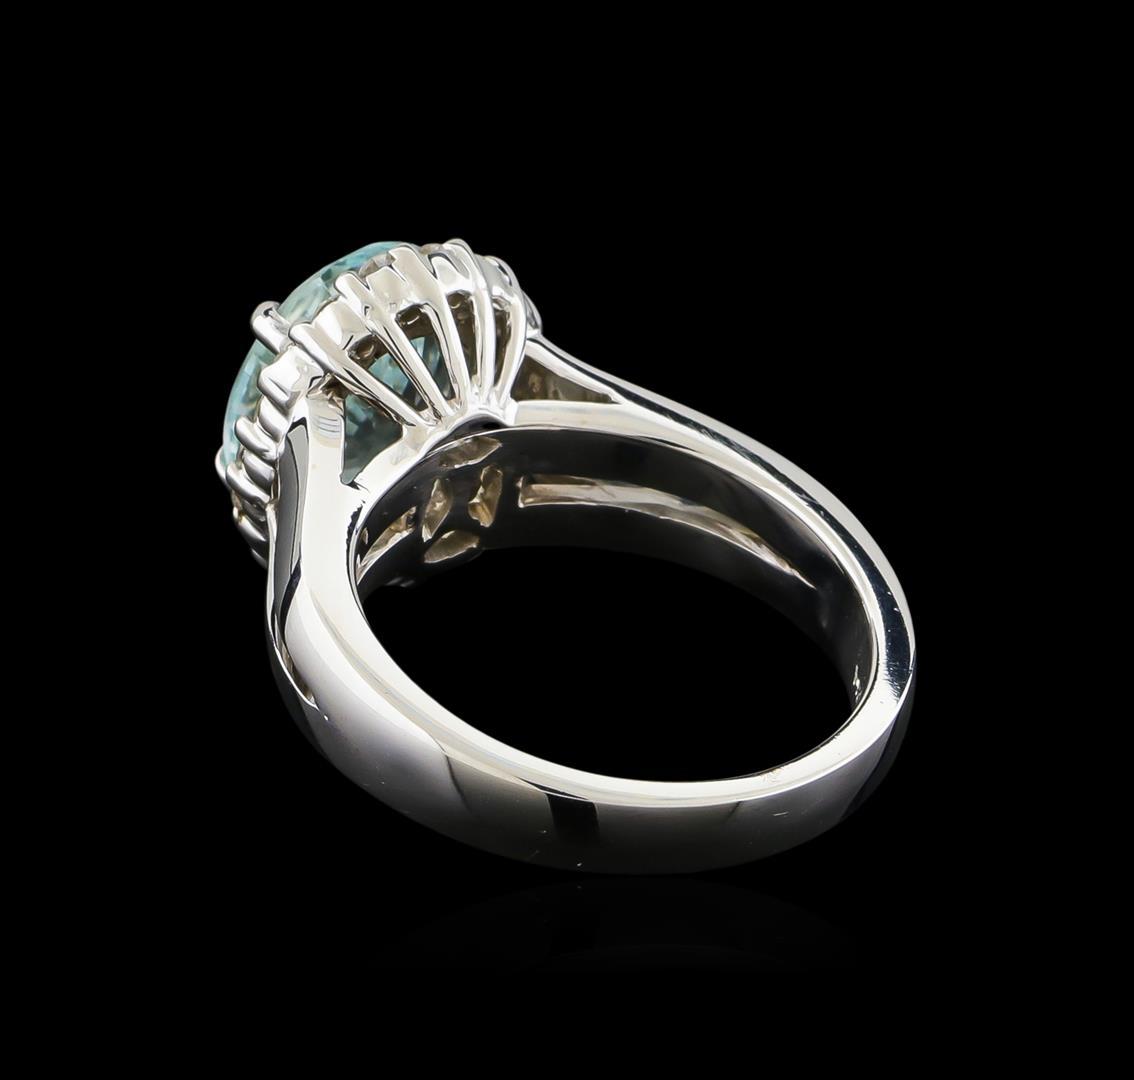 2.8 ctw Aquamarine and Diamond Ring - 14KT White Gold